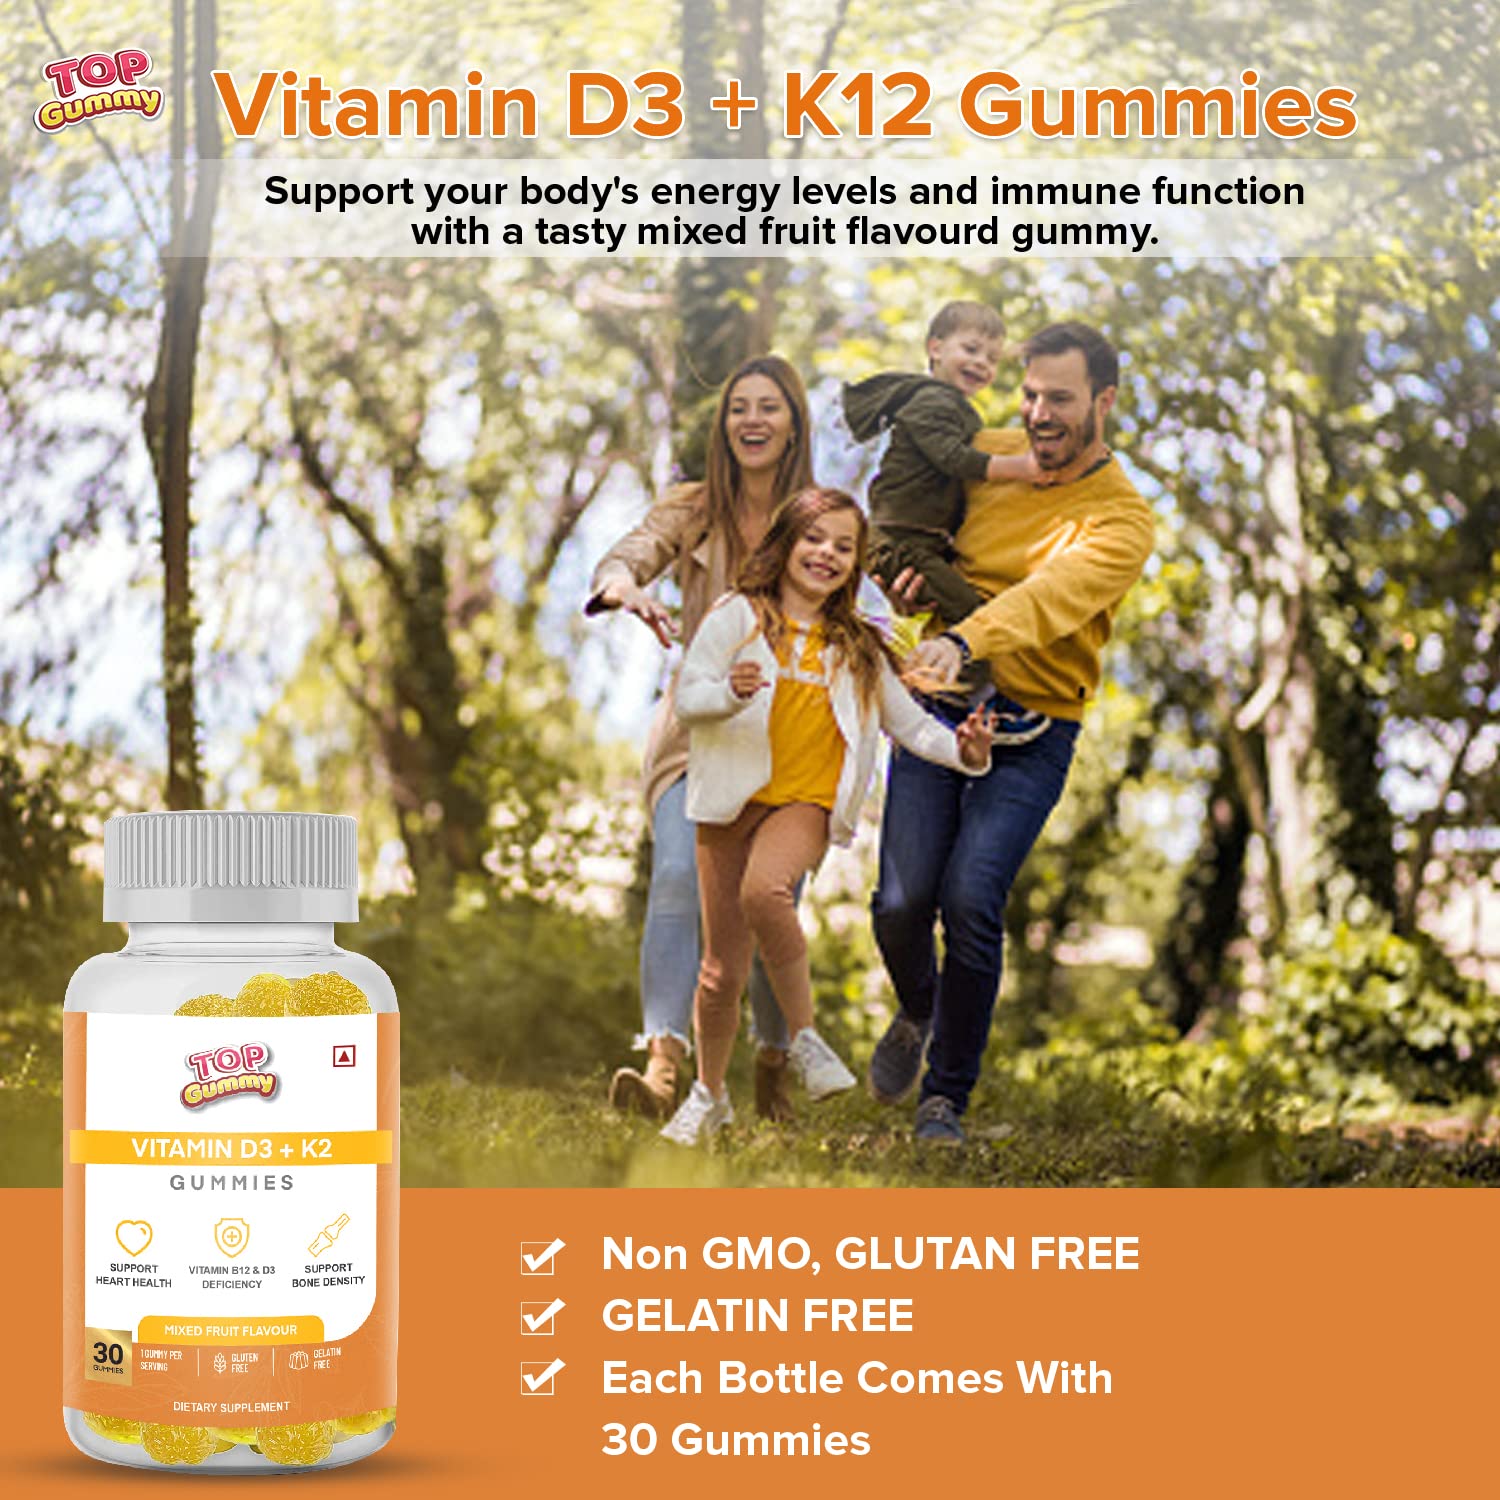 Top Gummy Vitamin D3 + K2 Gummies with Mixed Fruit Flavour| Supports Heart Health |Vitamin D3 & K2 Deficiency| Improves Bone Density - 30 Gummies, Gluten-Free, Gelatine-Free, Non-GMO (Pack of 5)